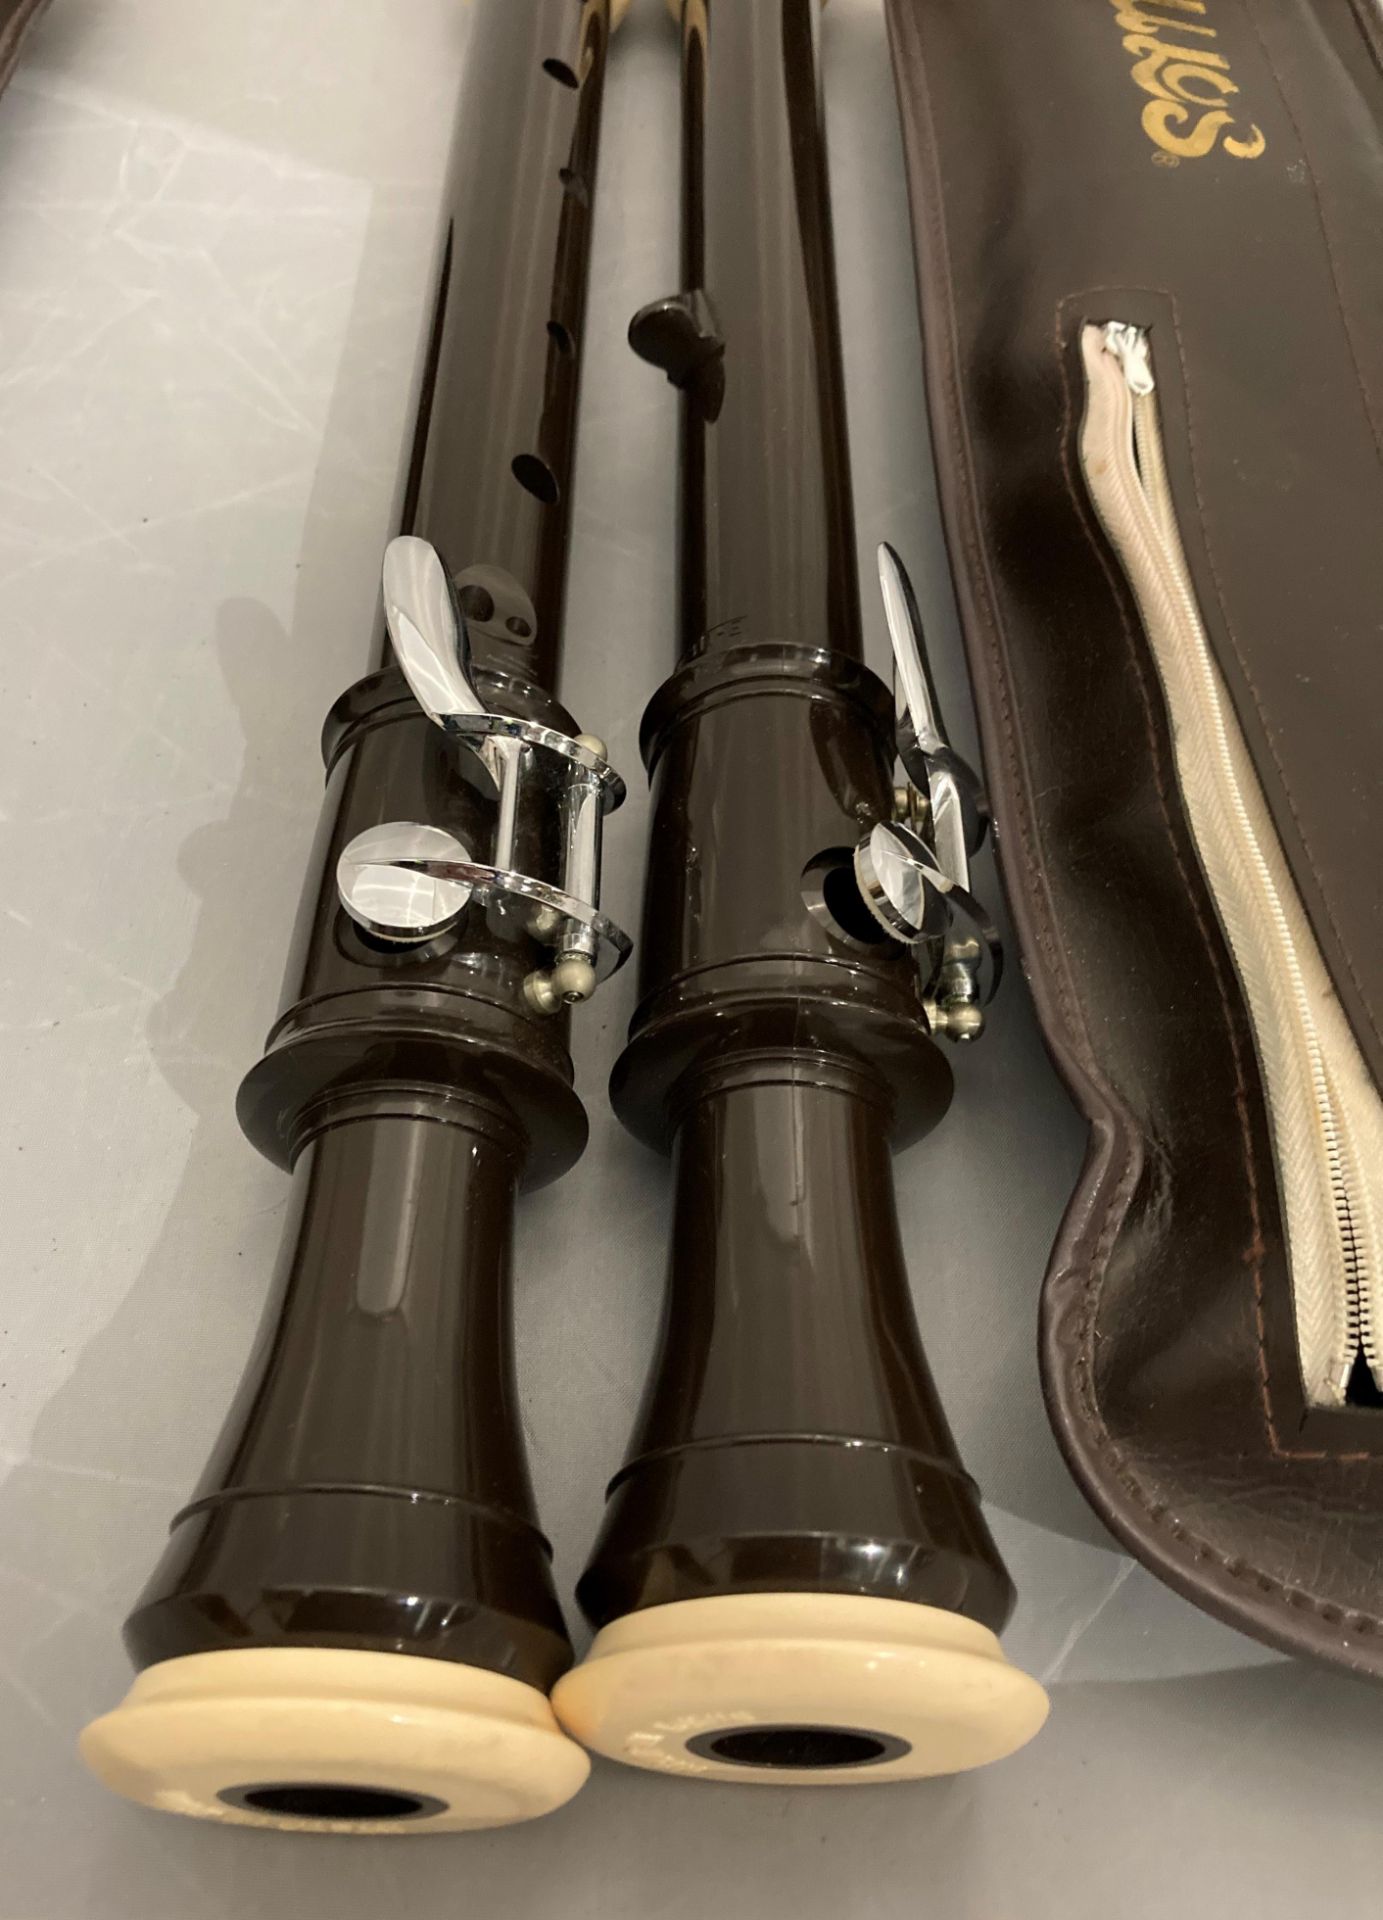 Two Aulos 311-E tenor recorders in cases (Saleroom location: S3) - Image 2 of 3